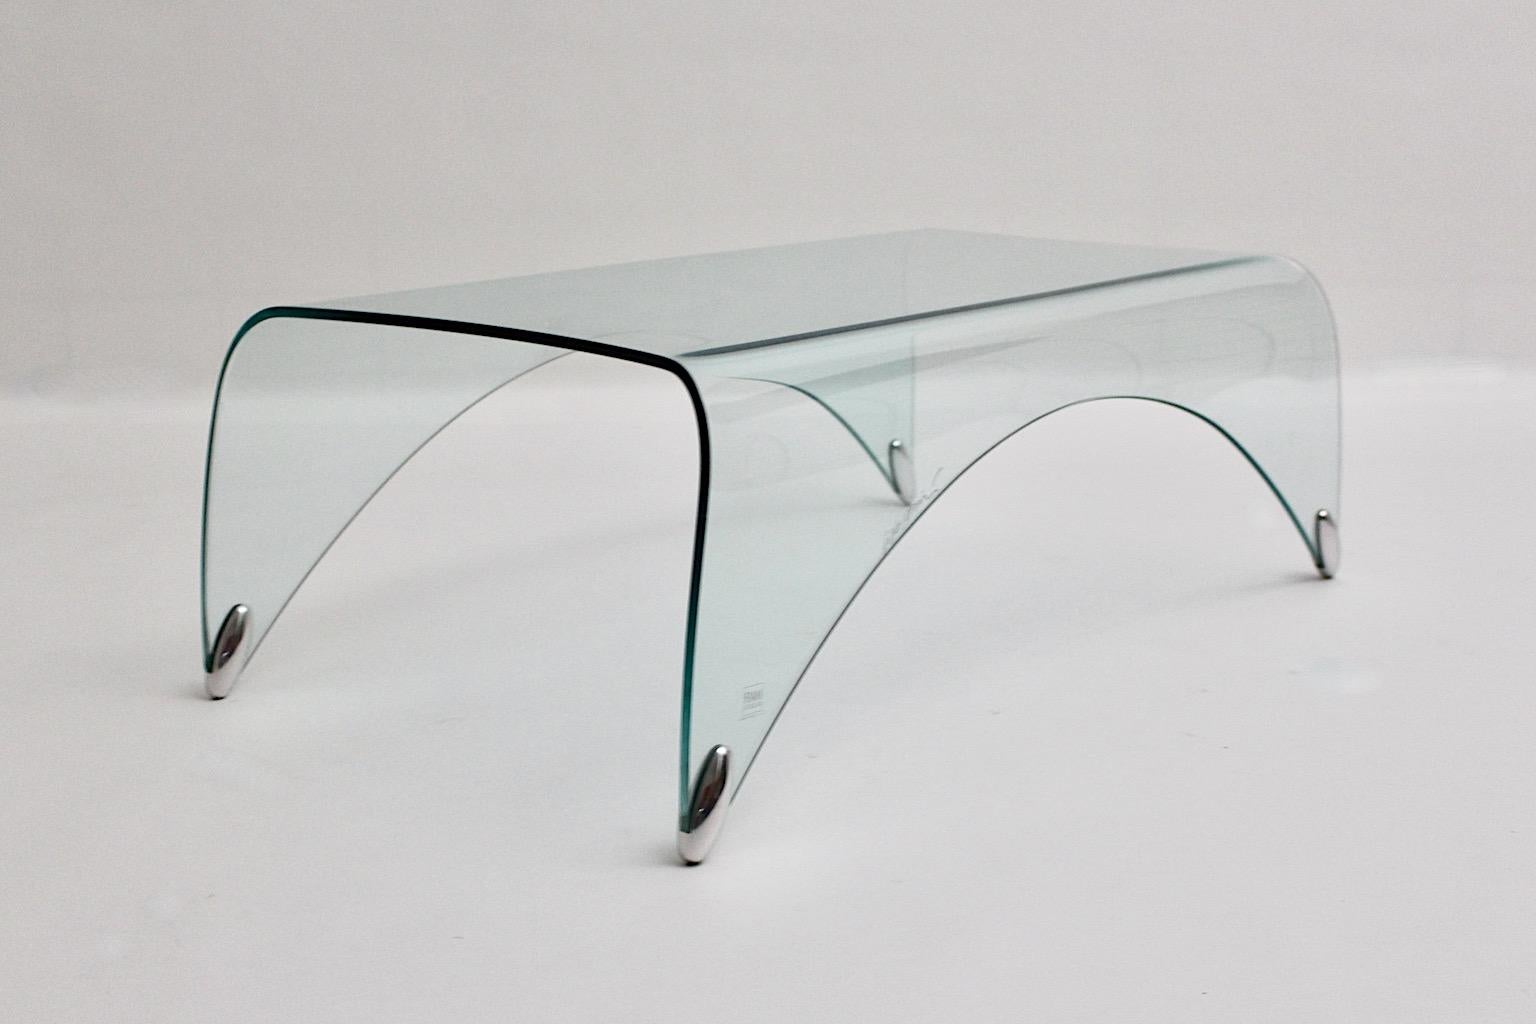 20th Century Modernist Vintage Organic Glass Sofa Table Massimo Iosa Ghini Fiam Italy 20th C For Sale